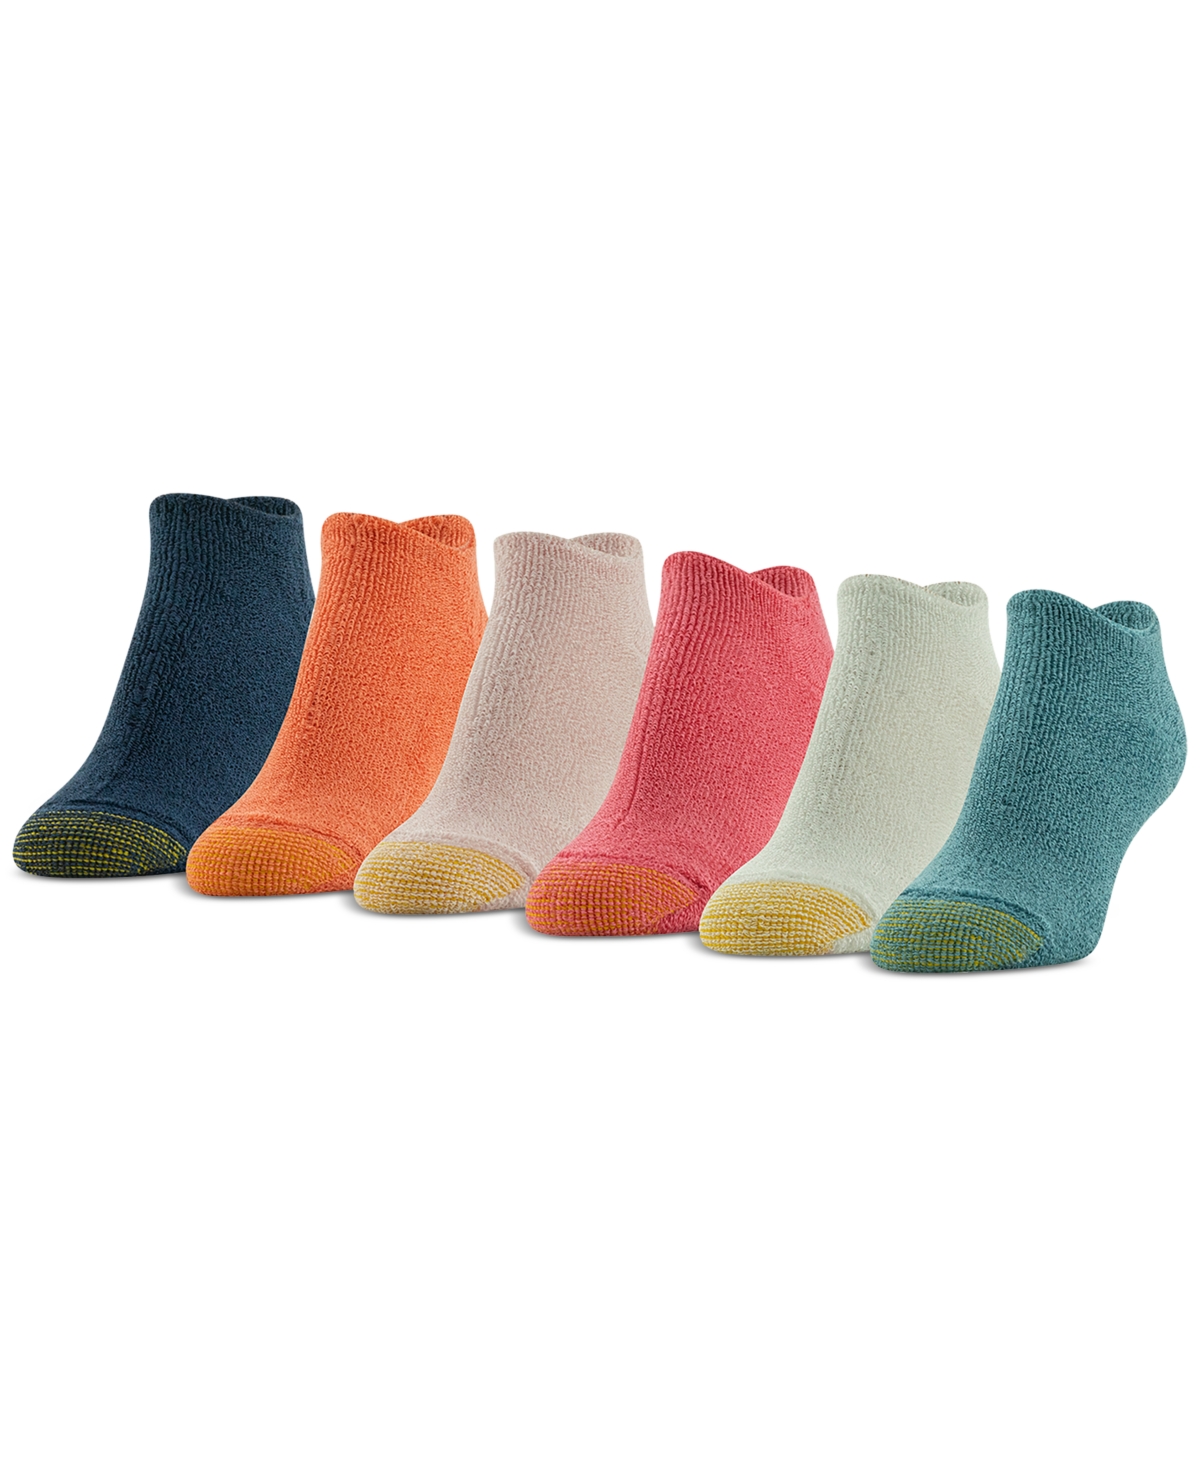 Women's 6-Pk. Terry Liner Socks - Assorted